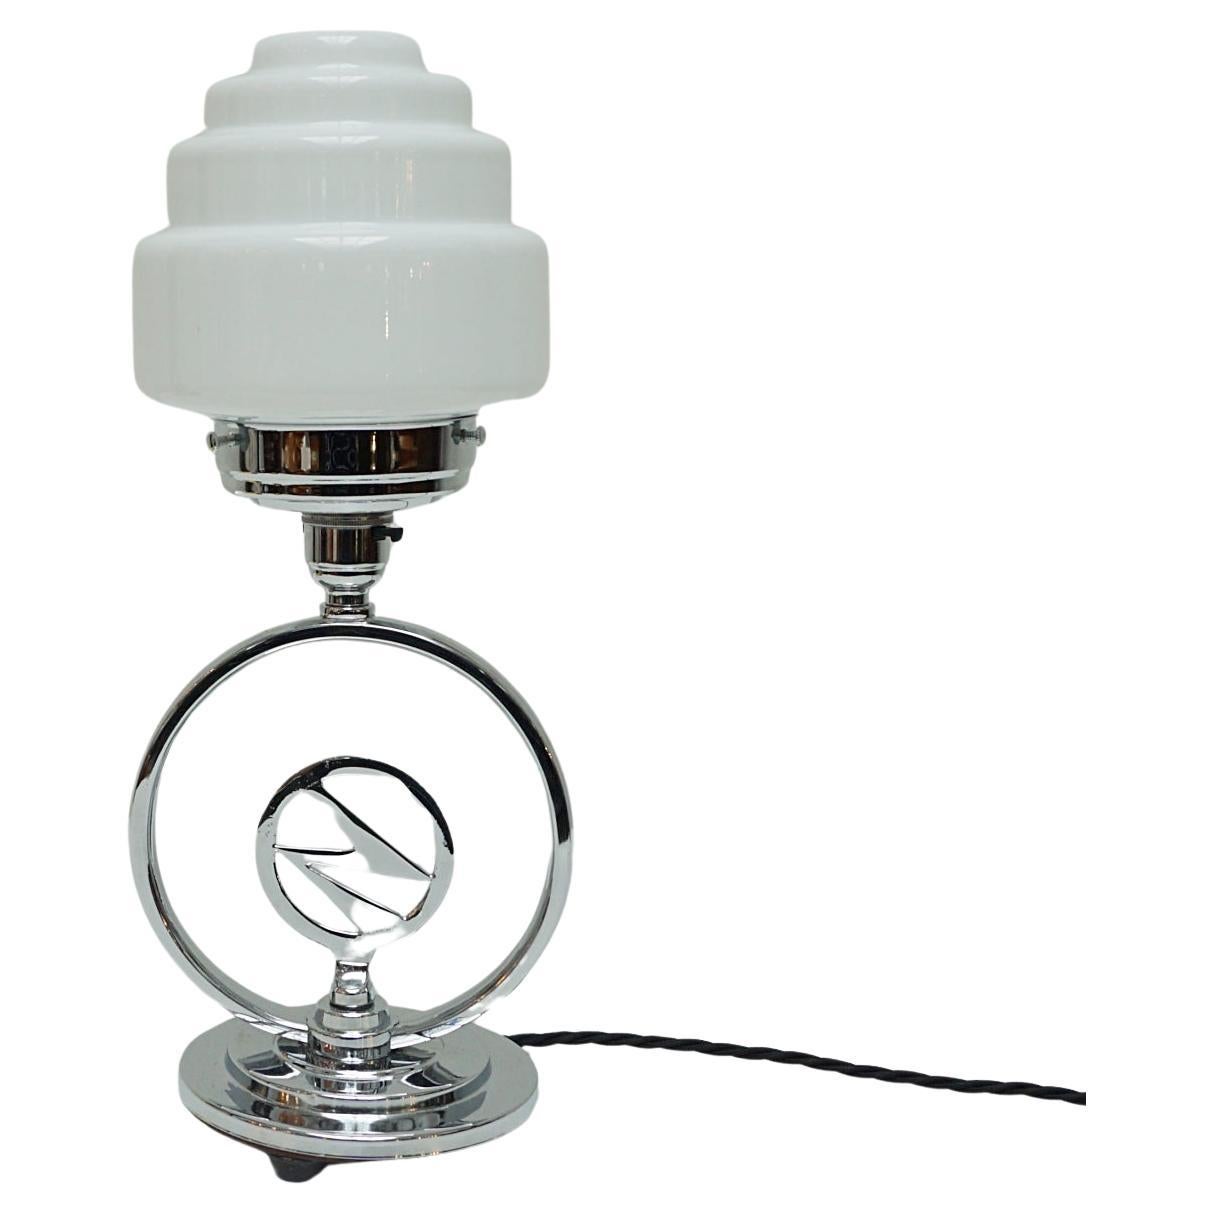 An Art Deco Chromed Lightning Bolt Table Lamp with Glass Globe Shade